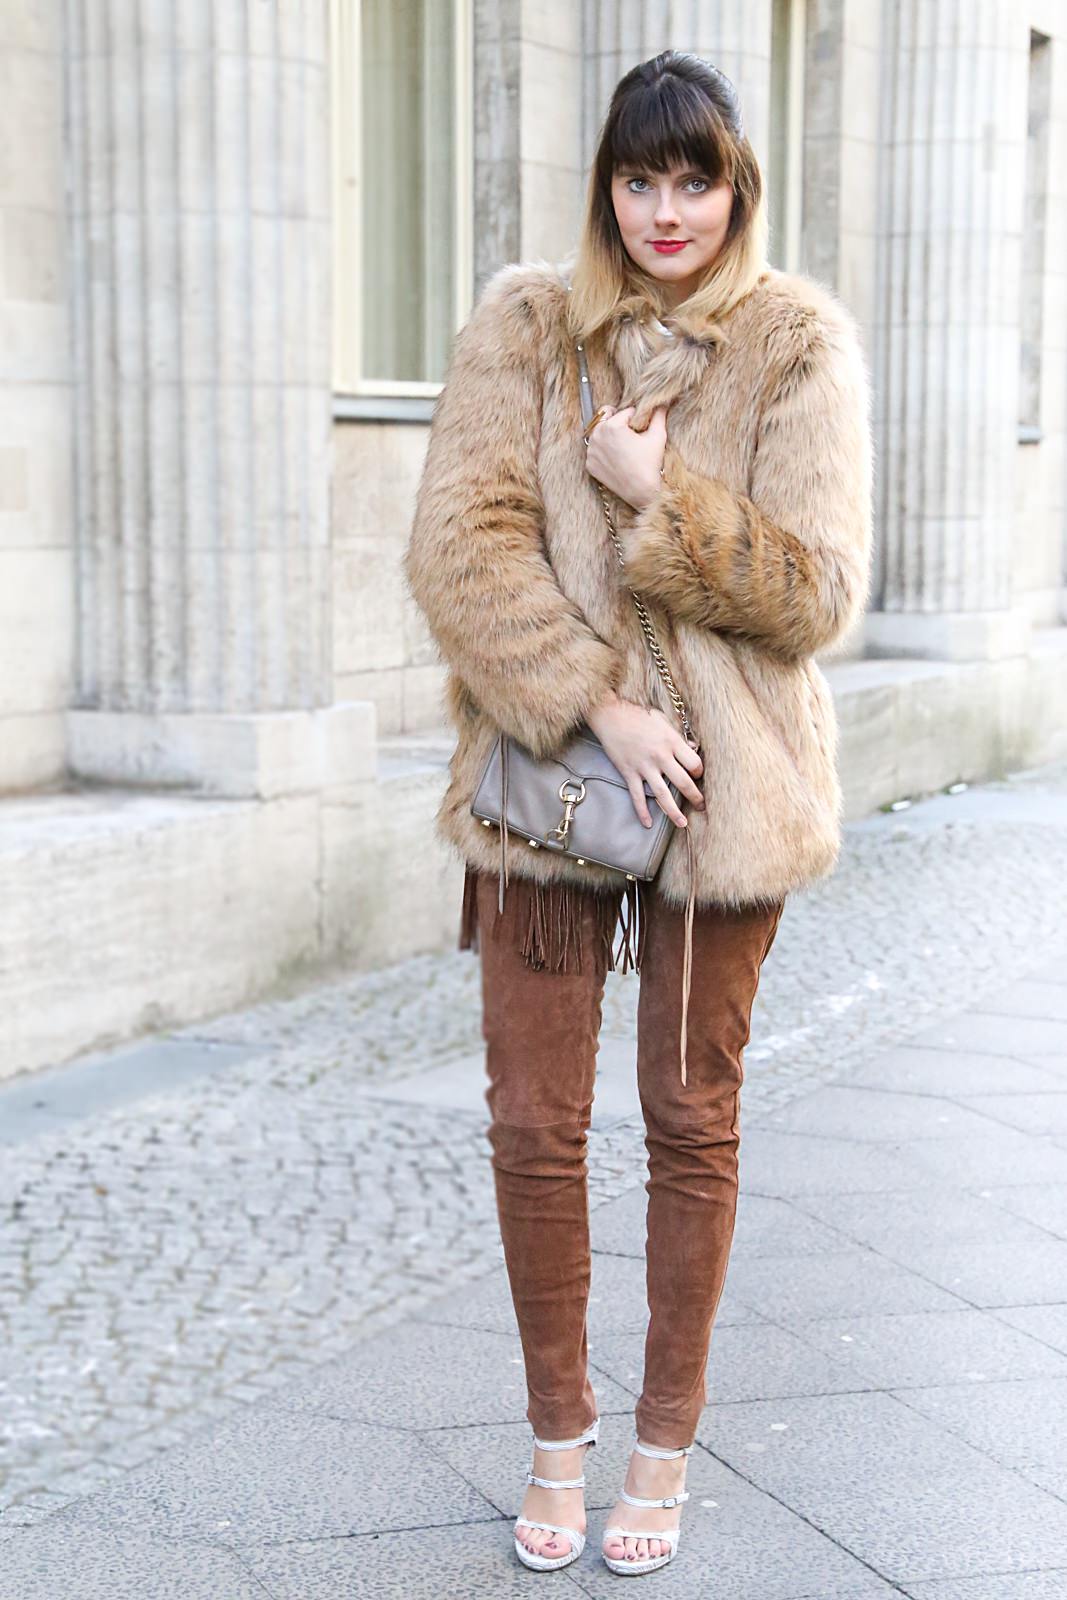 MBFW Januar 2016: Outfit mit brauner Lederhose & Fake-Fur Jacke